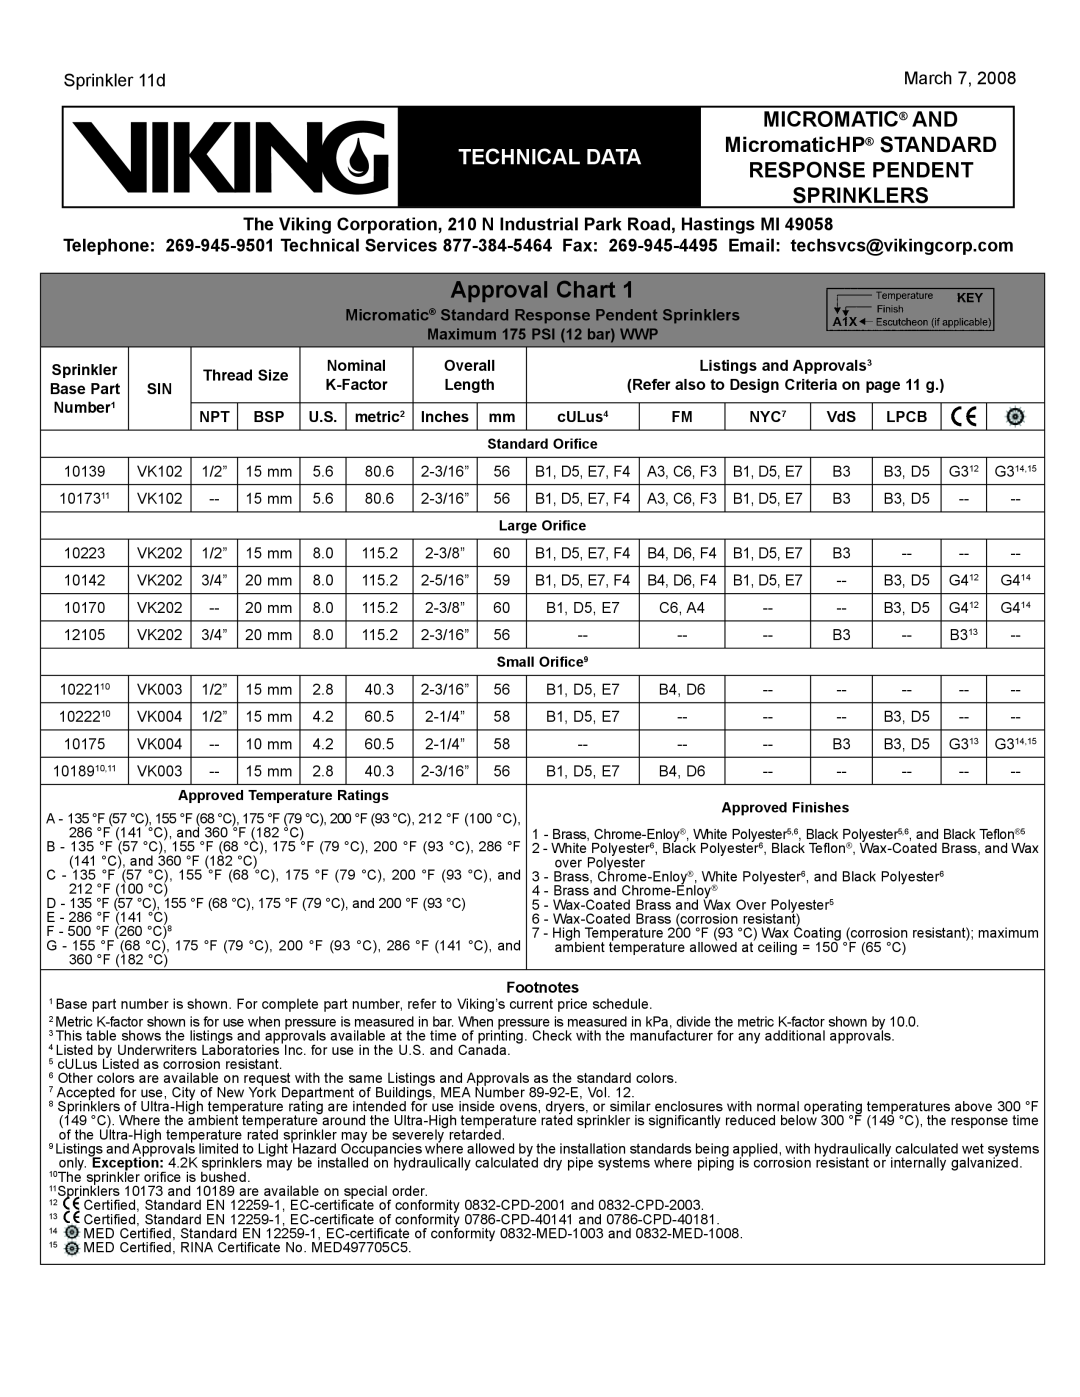 Viking Sprinkler 11a specifications Approval Chart, Sprinkler 11d, Micromatic Standard Response Pendent Sprinklers, March 7 